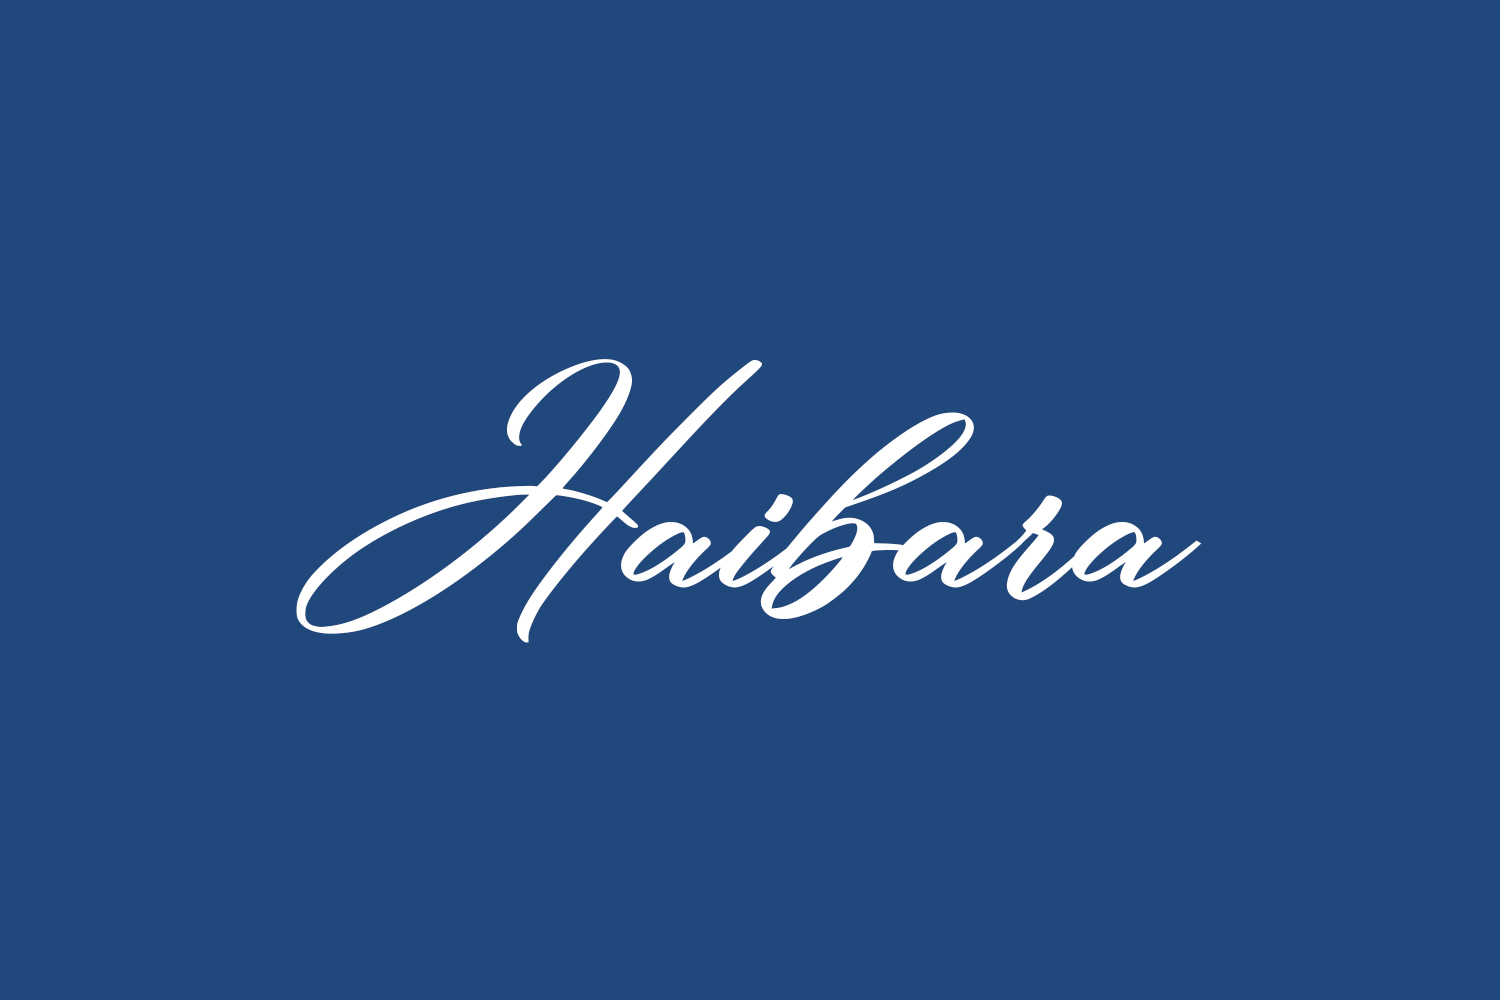 Haibara Free Font